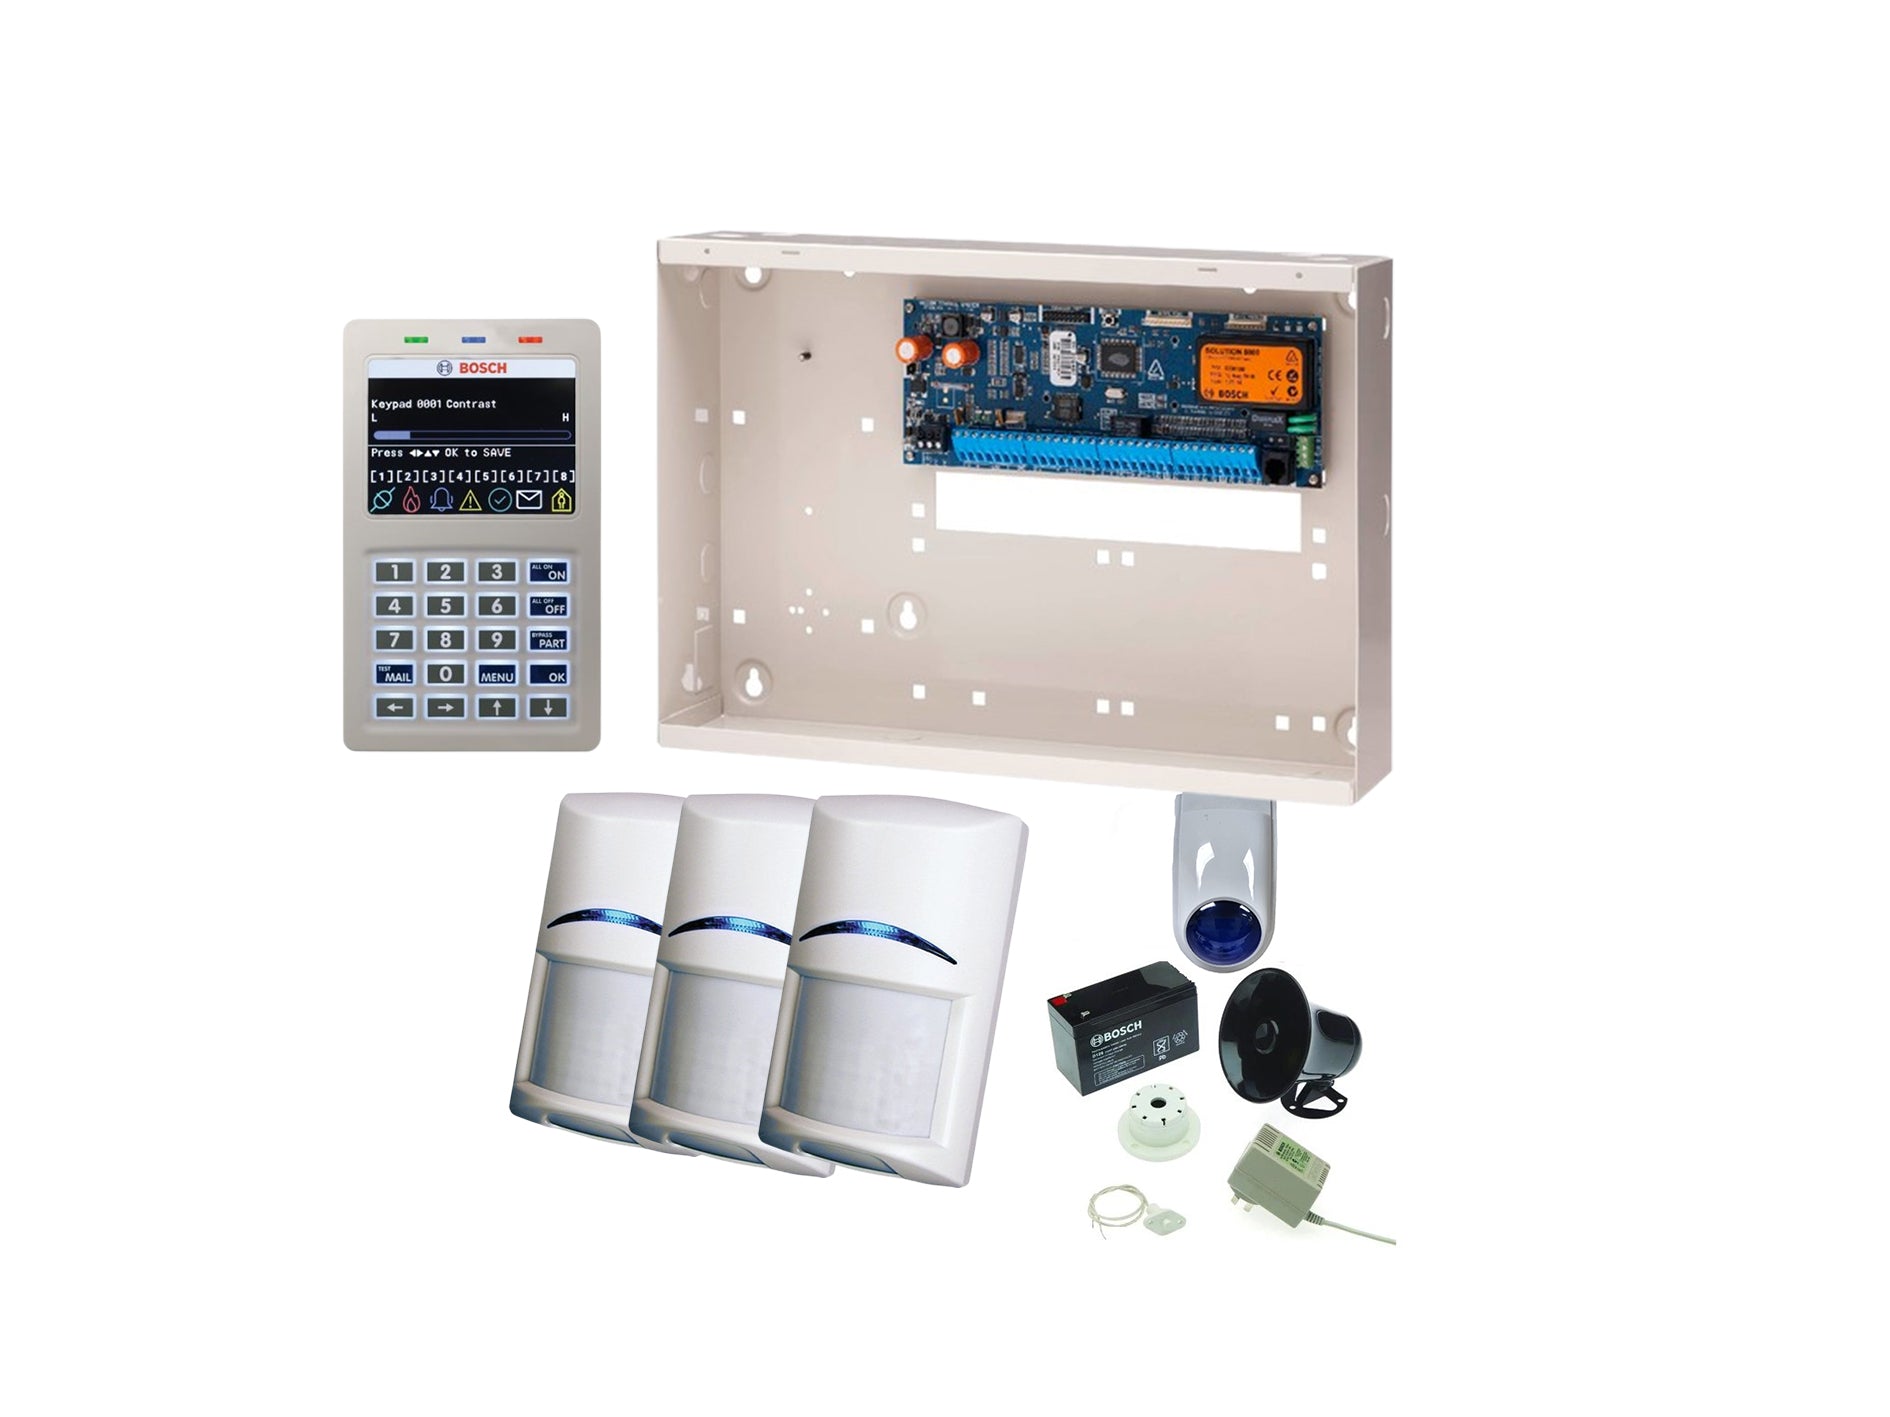 BOSCH, Solution 6000, Alarm kit, + panel, WiFi Prox LCD keypad, 3x PIR detectors + Siren Kit